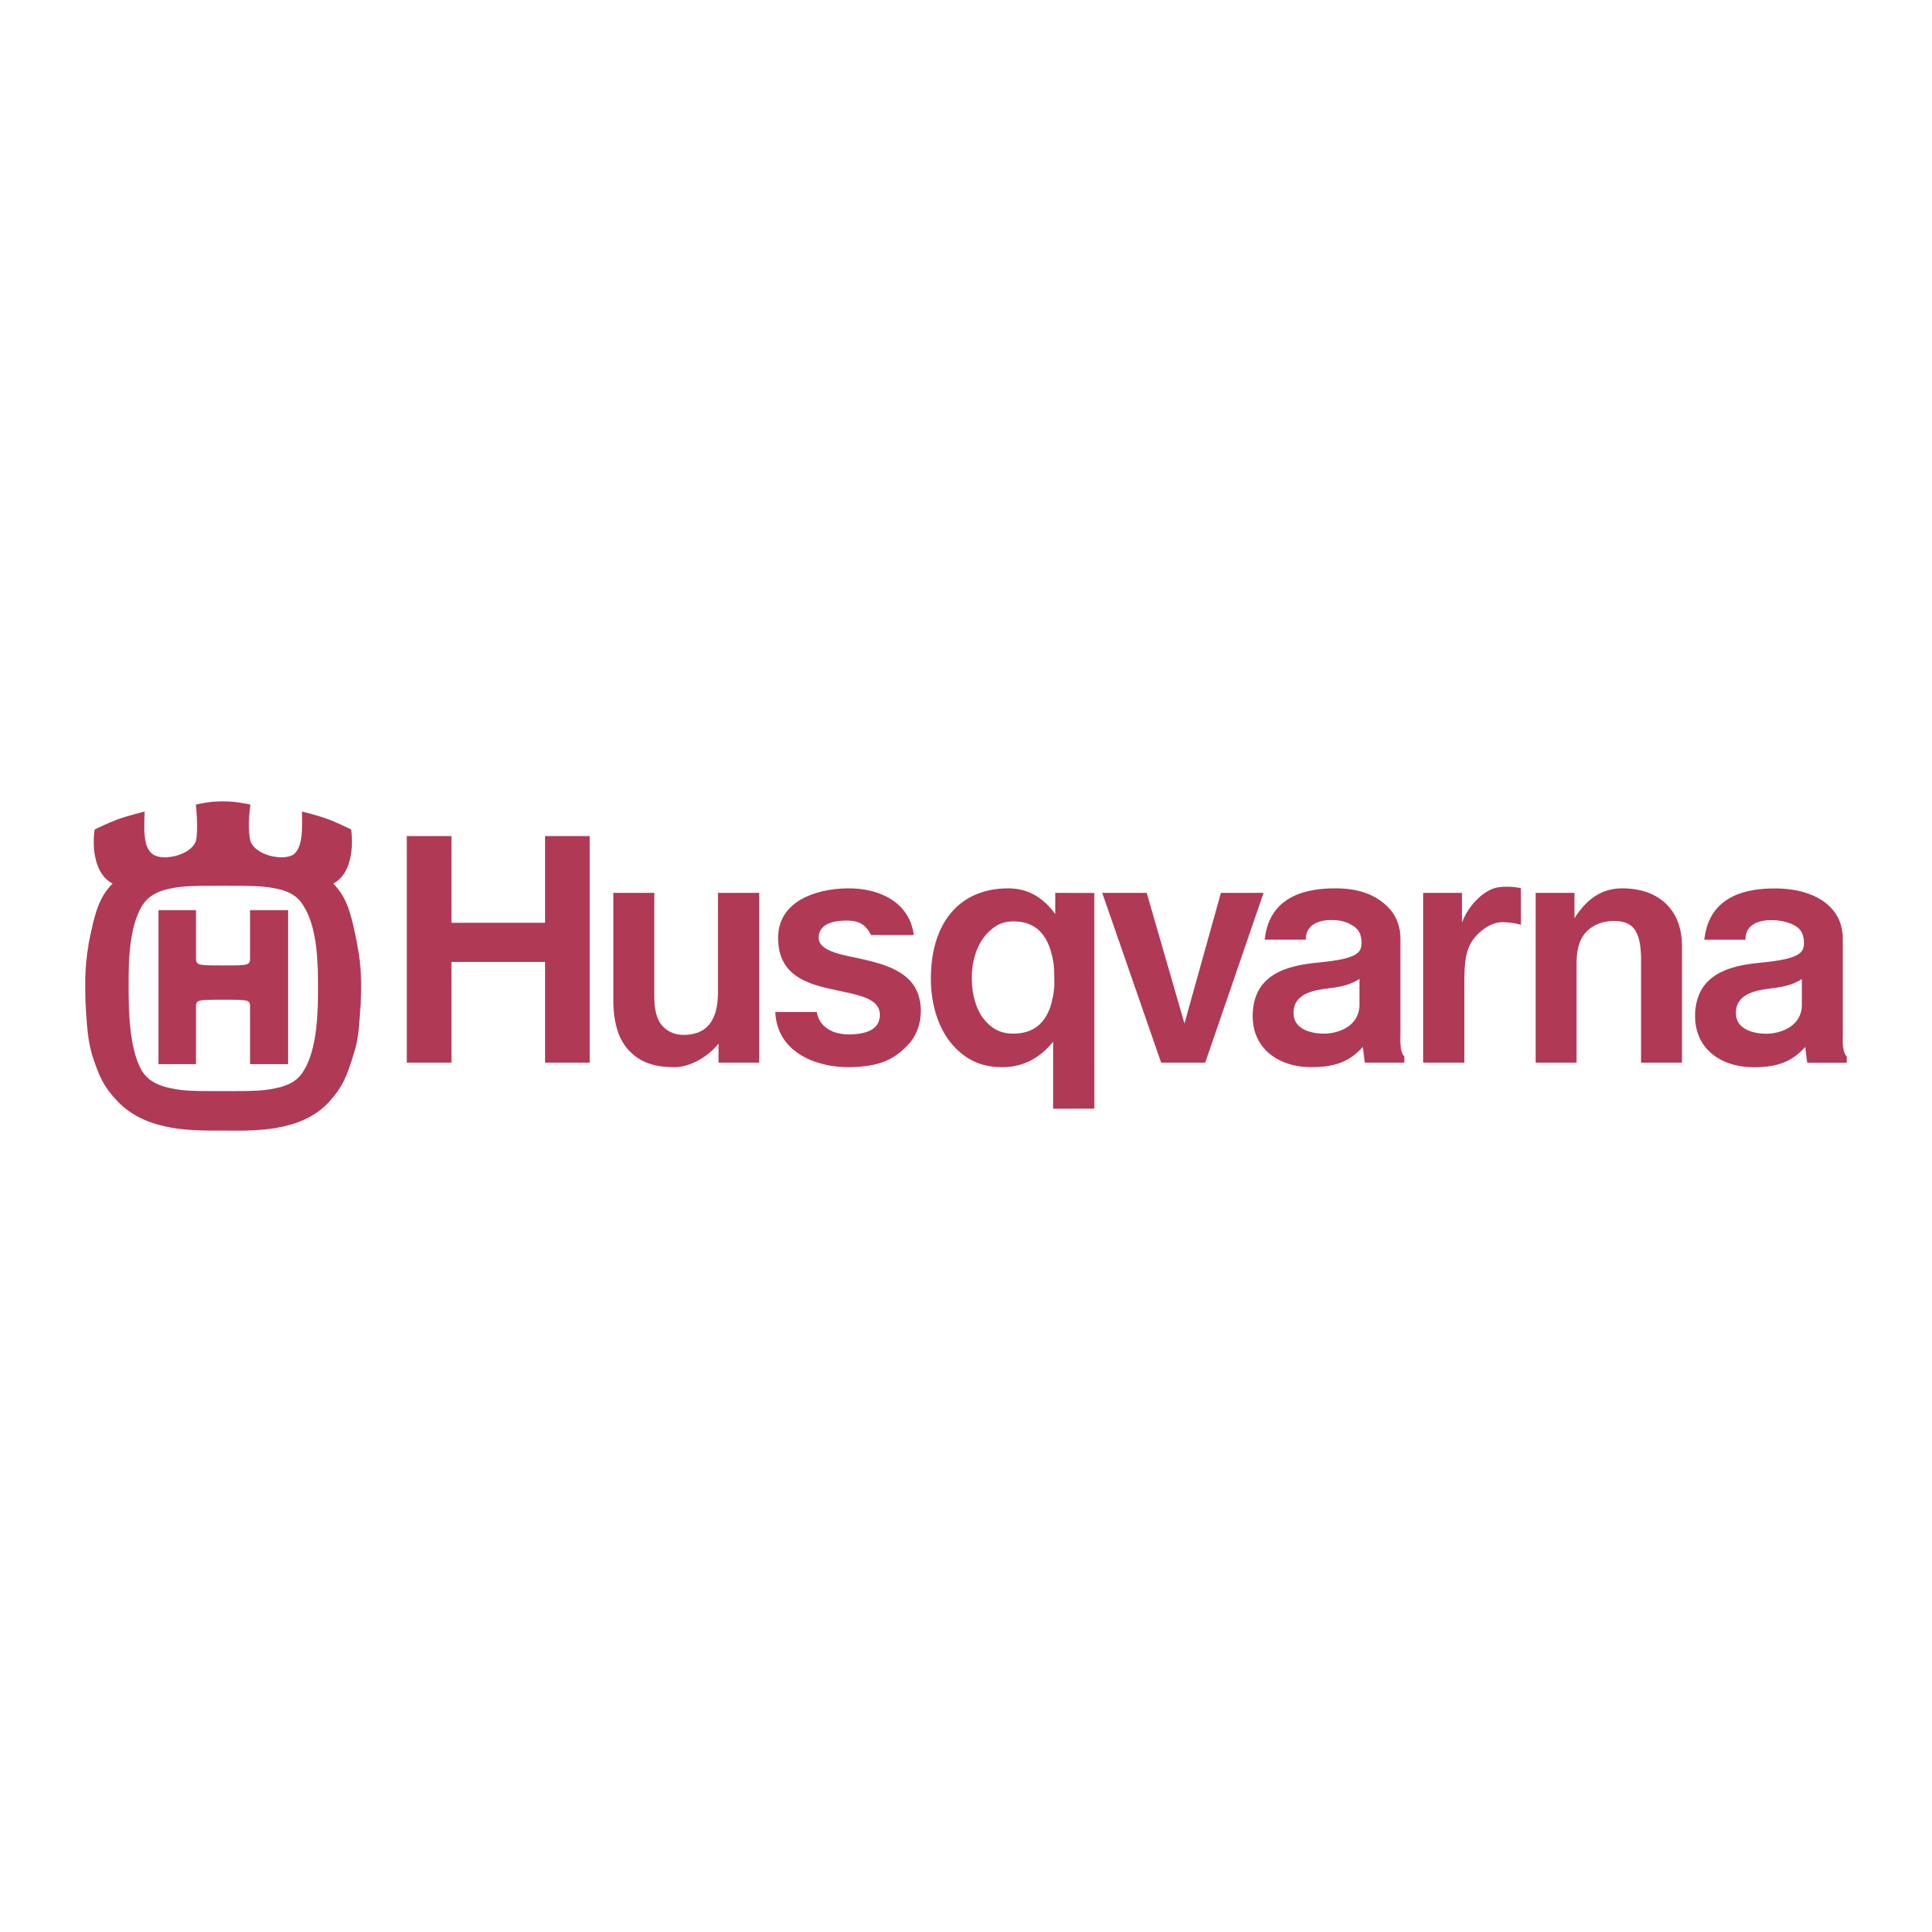 husqvarna-3-logo-png-transparent.png